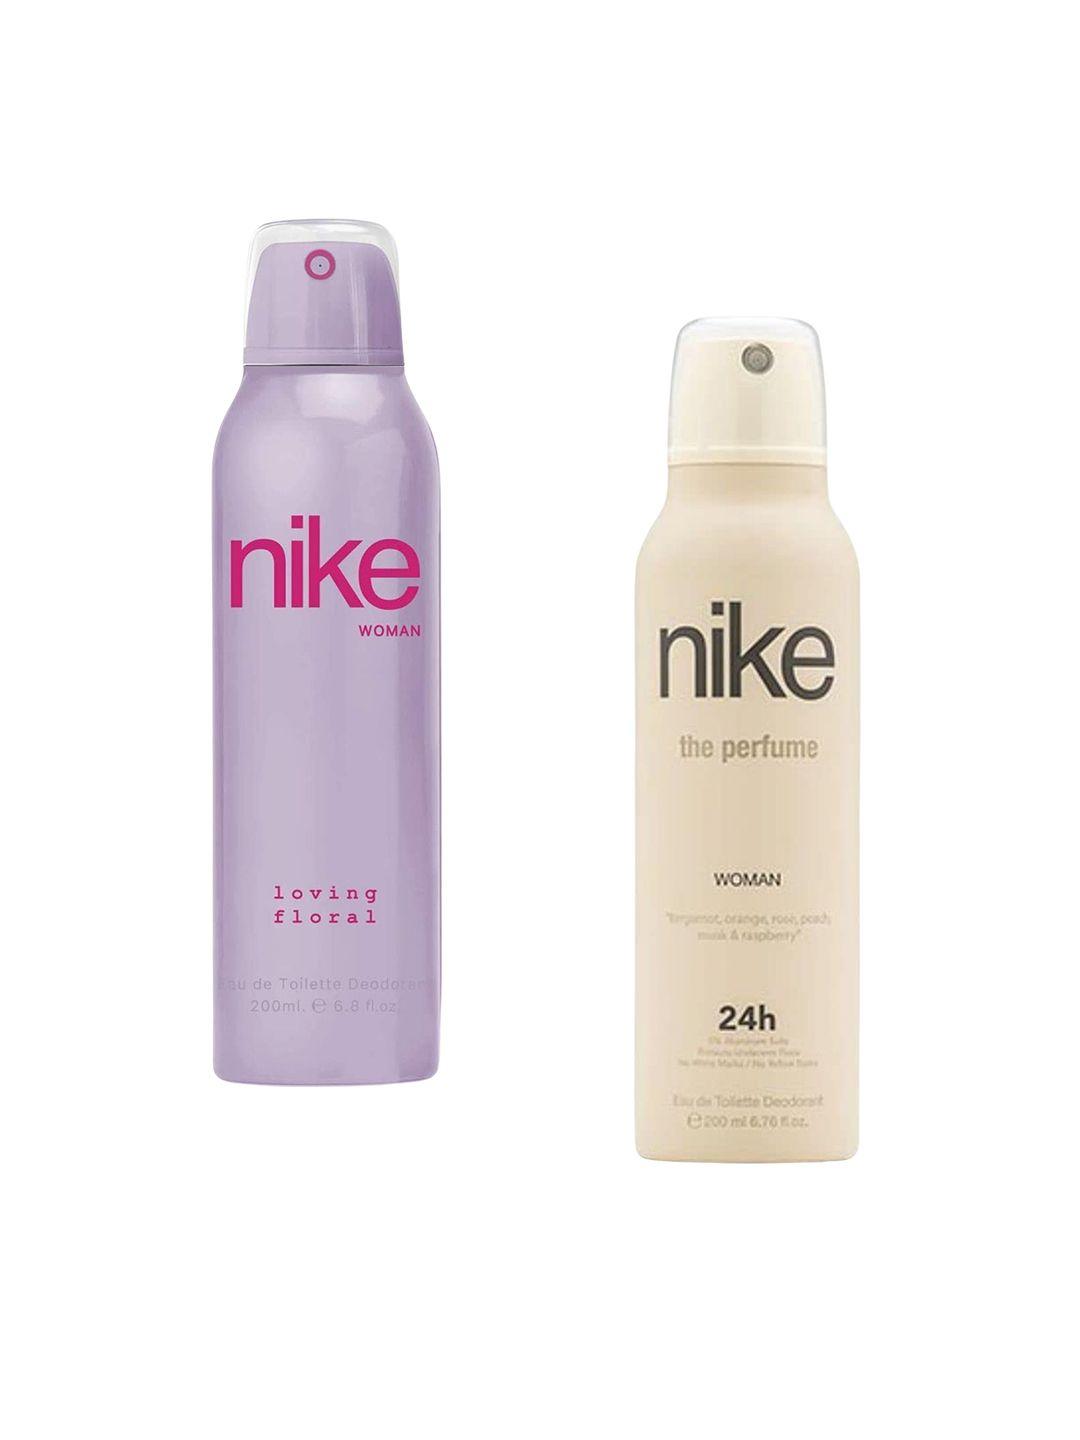 nike women set of 2 loving floral & the perfume eau de toilette deodorants - 200ml each